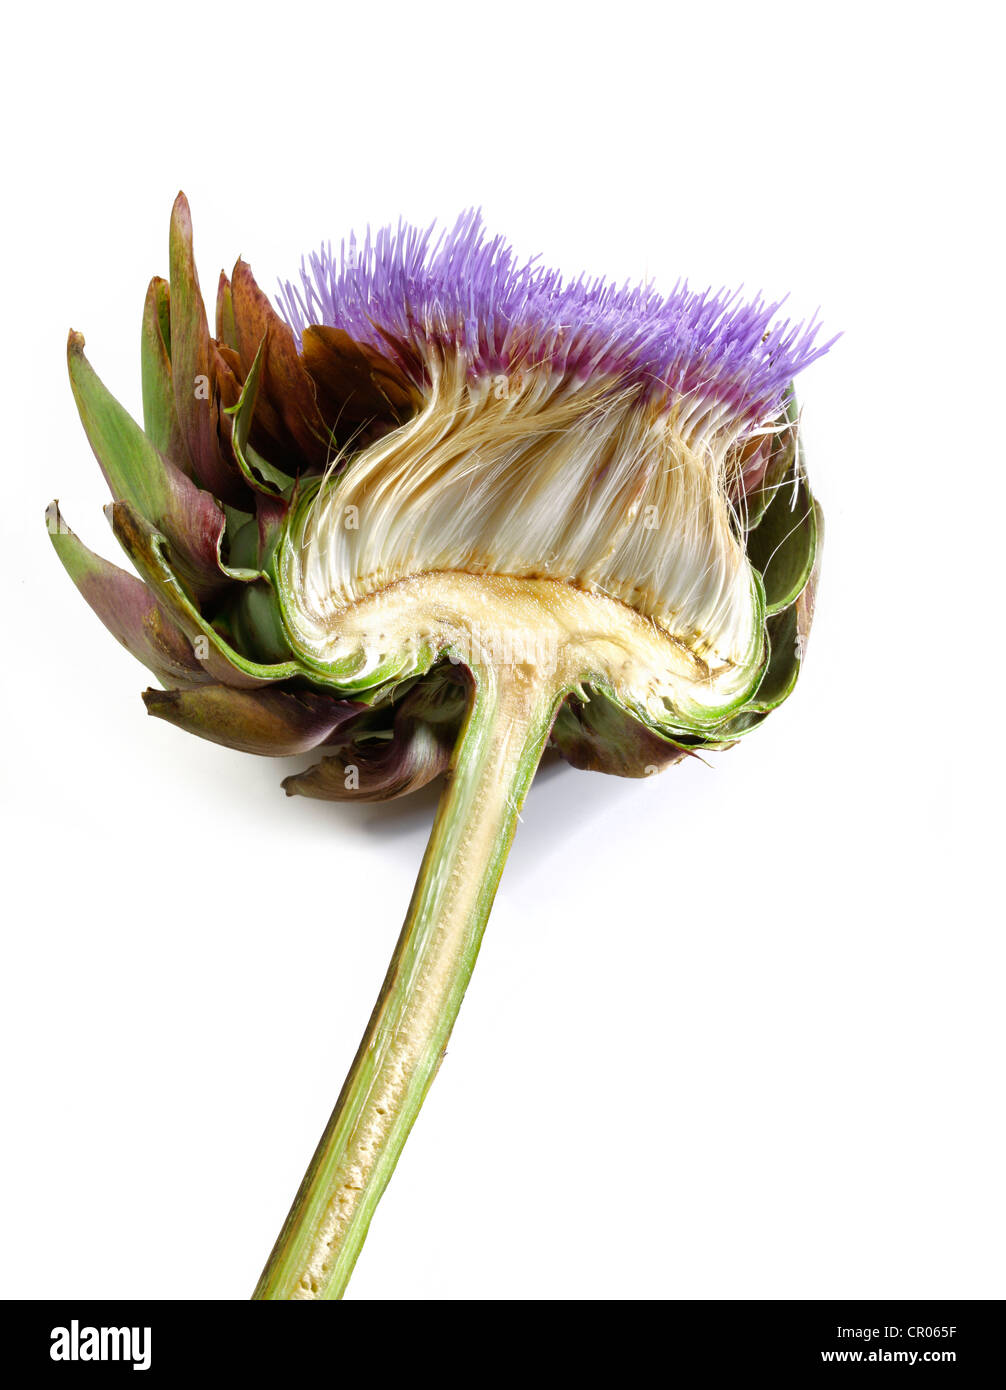 Halved flower of a Cardoon or Artichoke Thistle (Cynara cardunculus, Cynara scolymus) Stock Photo